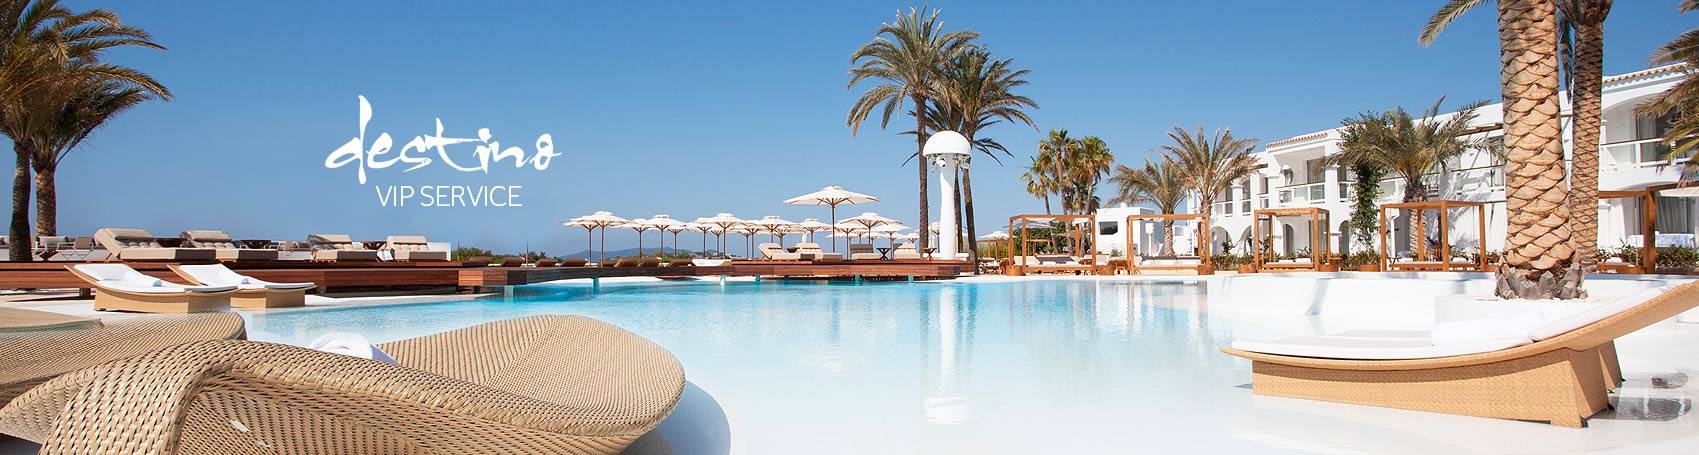 VIP Table Reservation Service at Destino Pacha Ibiza Resort. VIP Services Ibiza. Consulting Services Ibiza